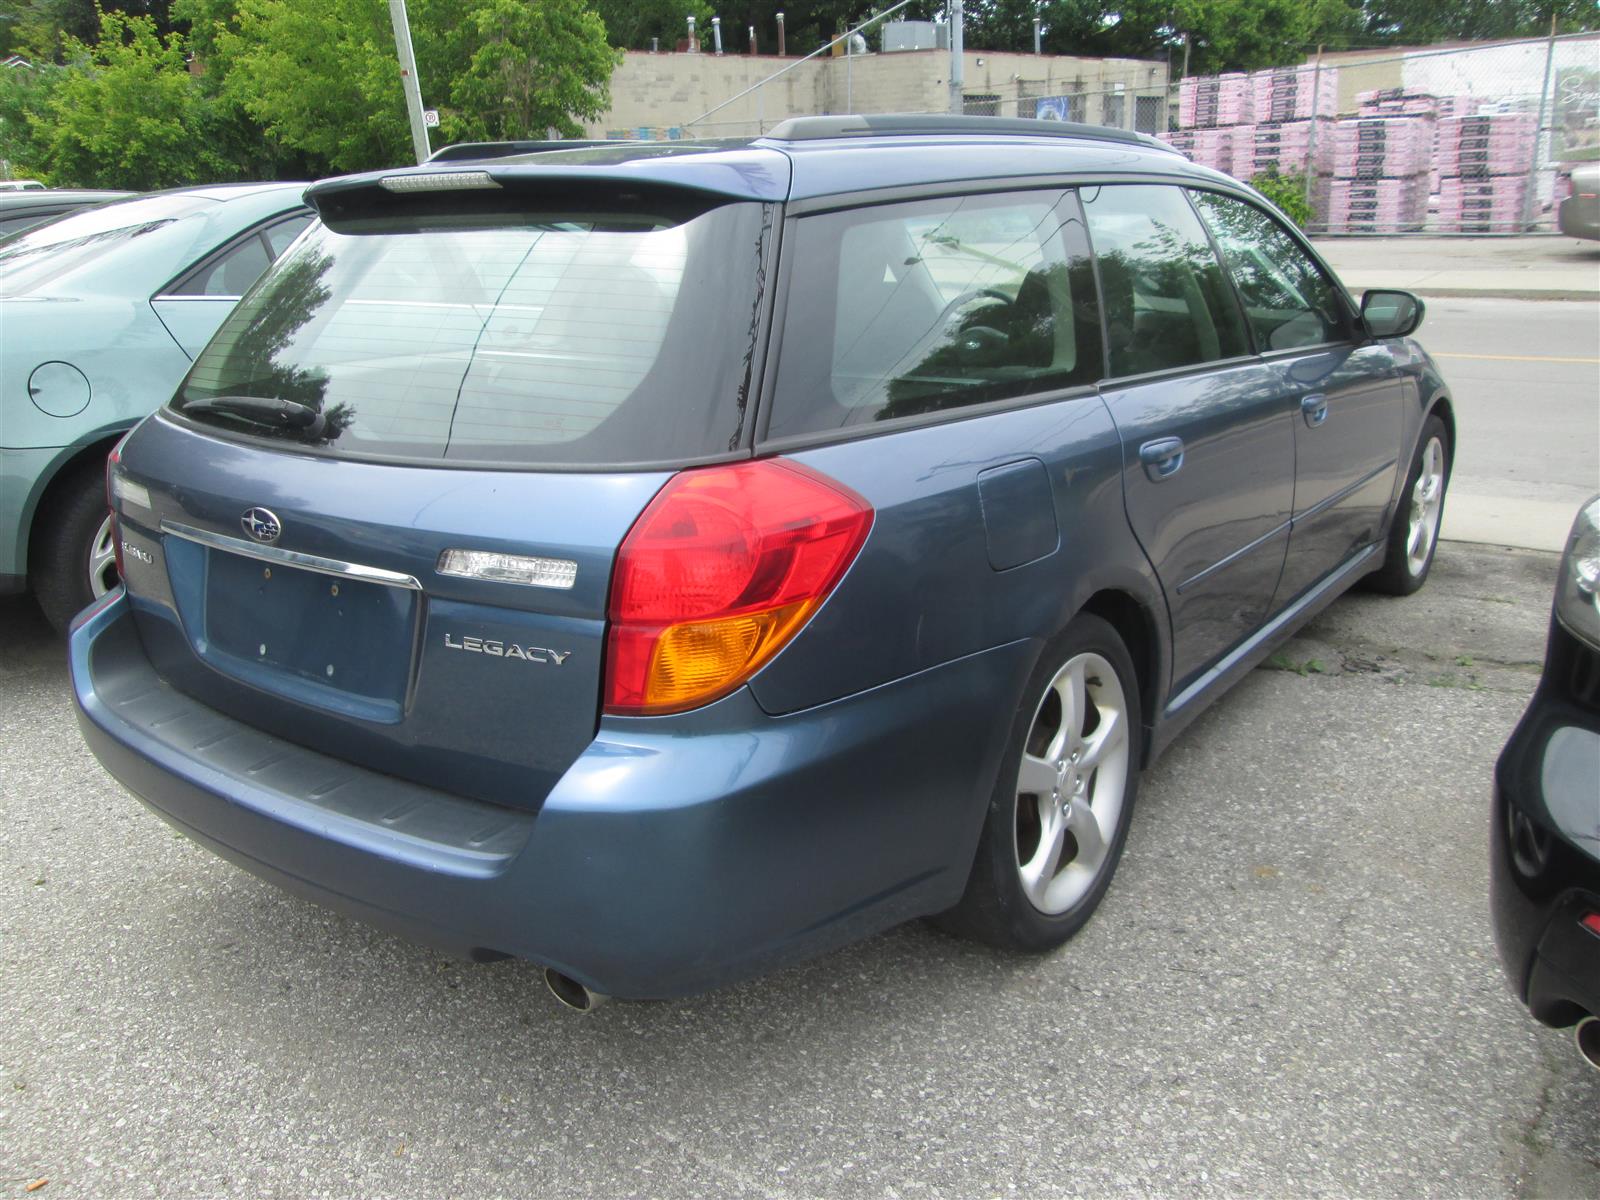 Subaru Legacy, 4 doors, Blue, Scarborough